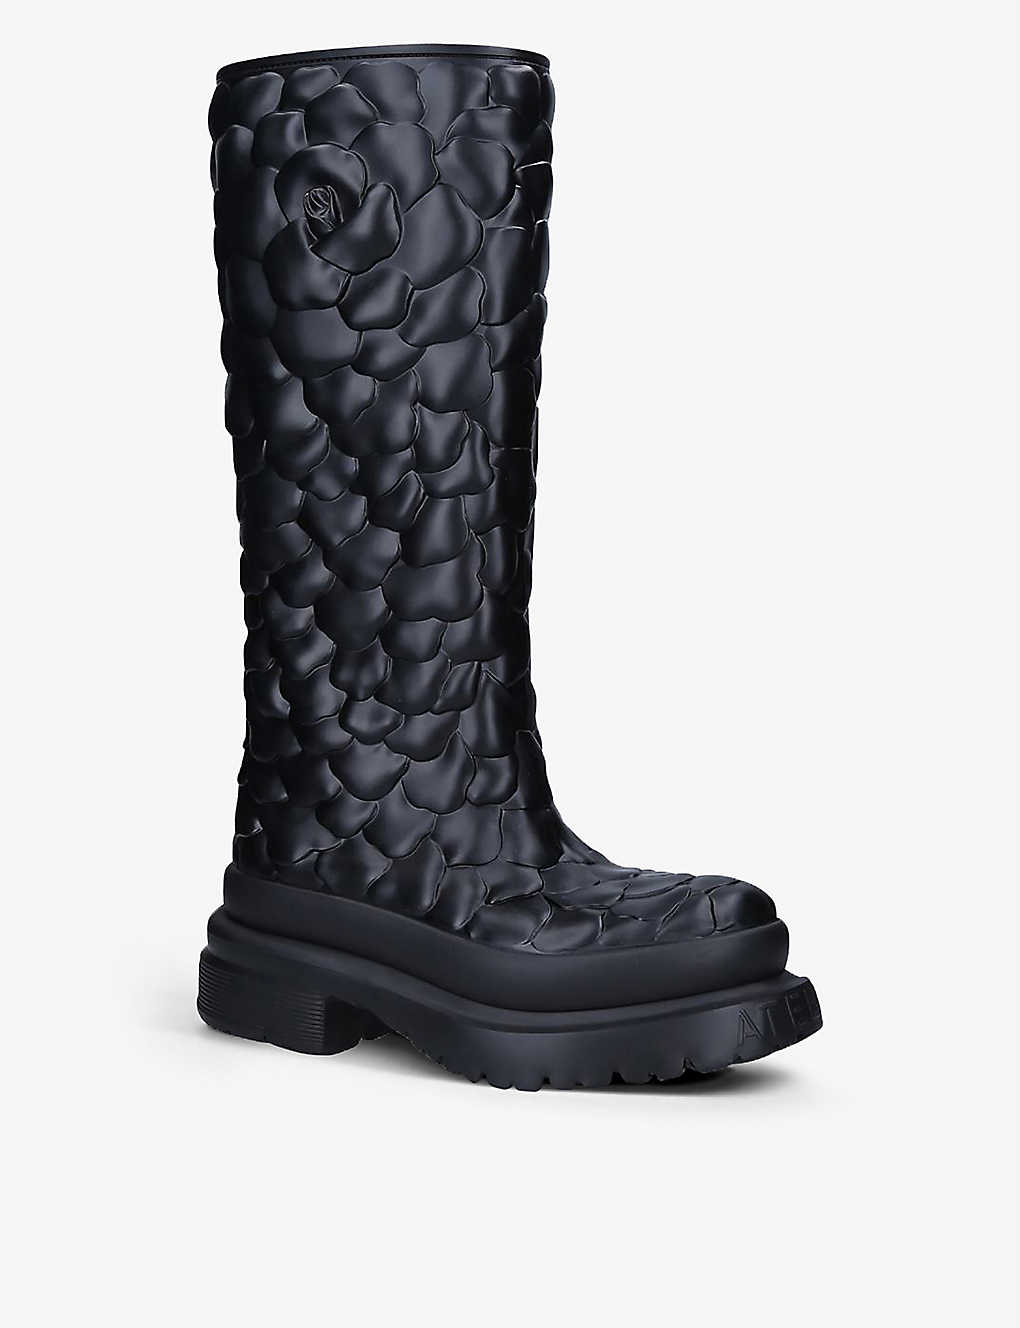 VALENTINO GARAVANI Atelier petal-embellished rubber rain boots £720.00